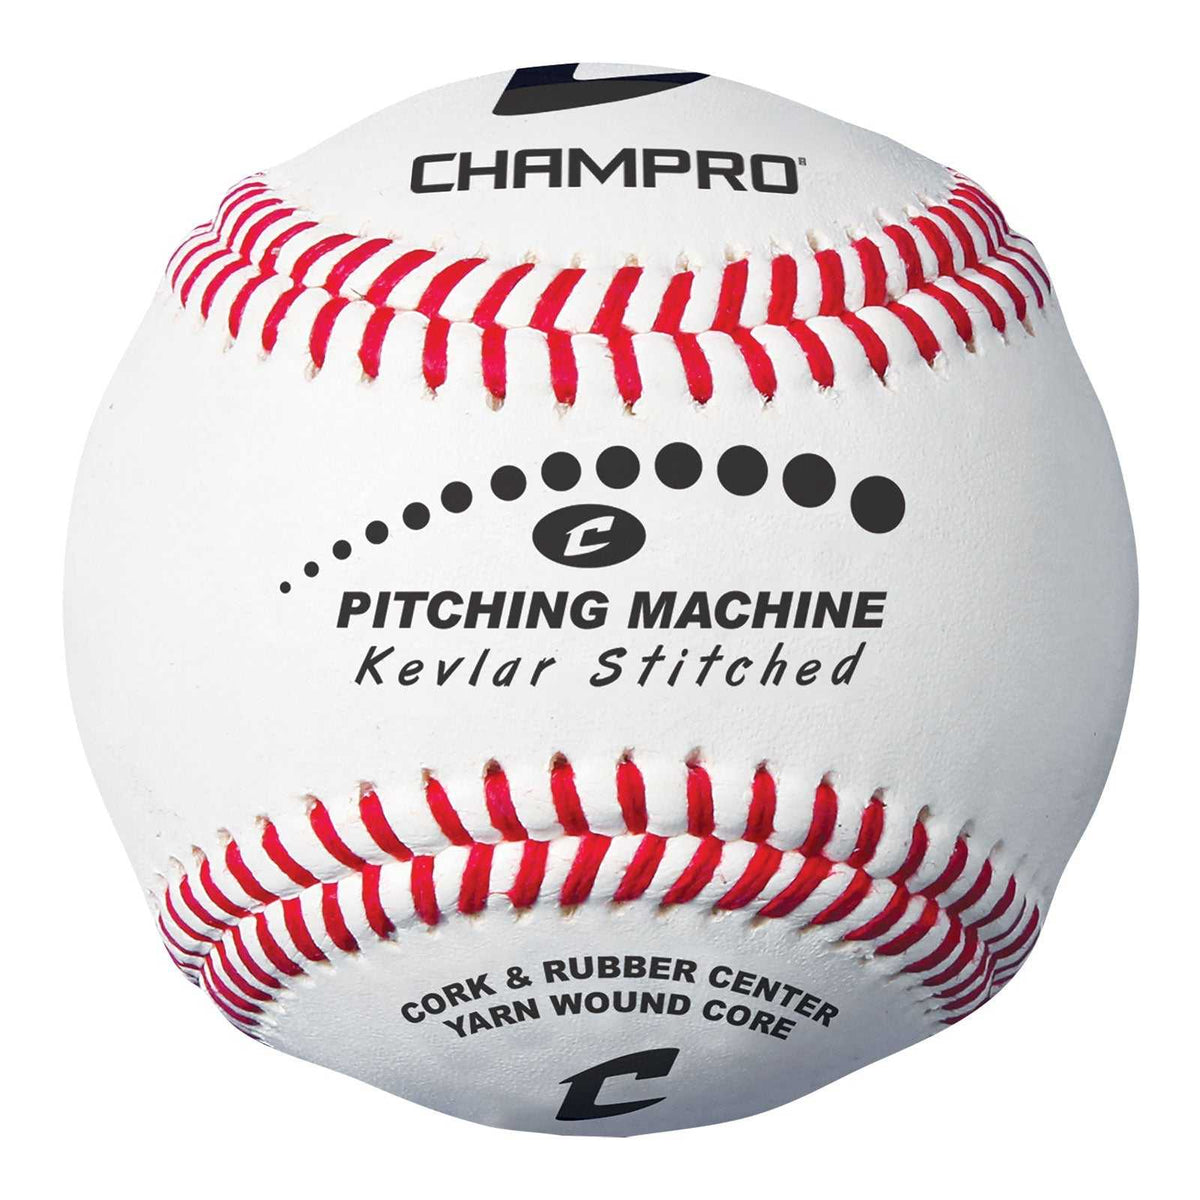 Champro CBBPMB Kevlar Stitched Baseball7 Cork/Rubber Core - HIT a Double